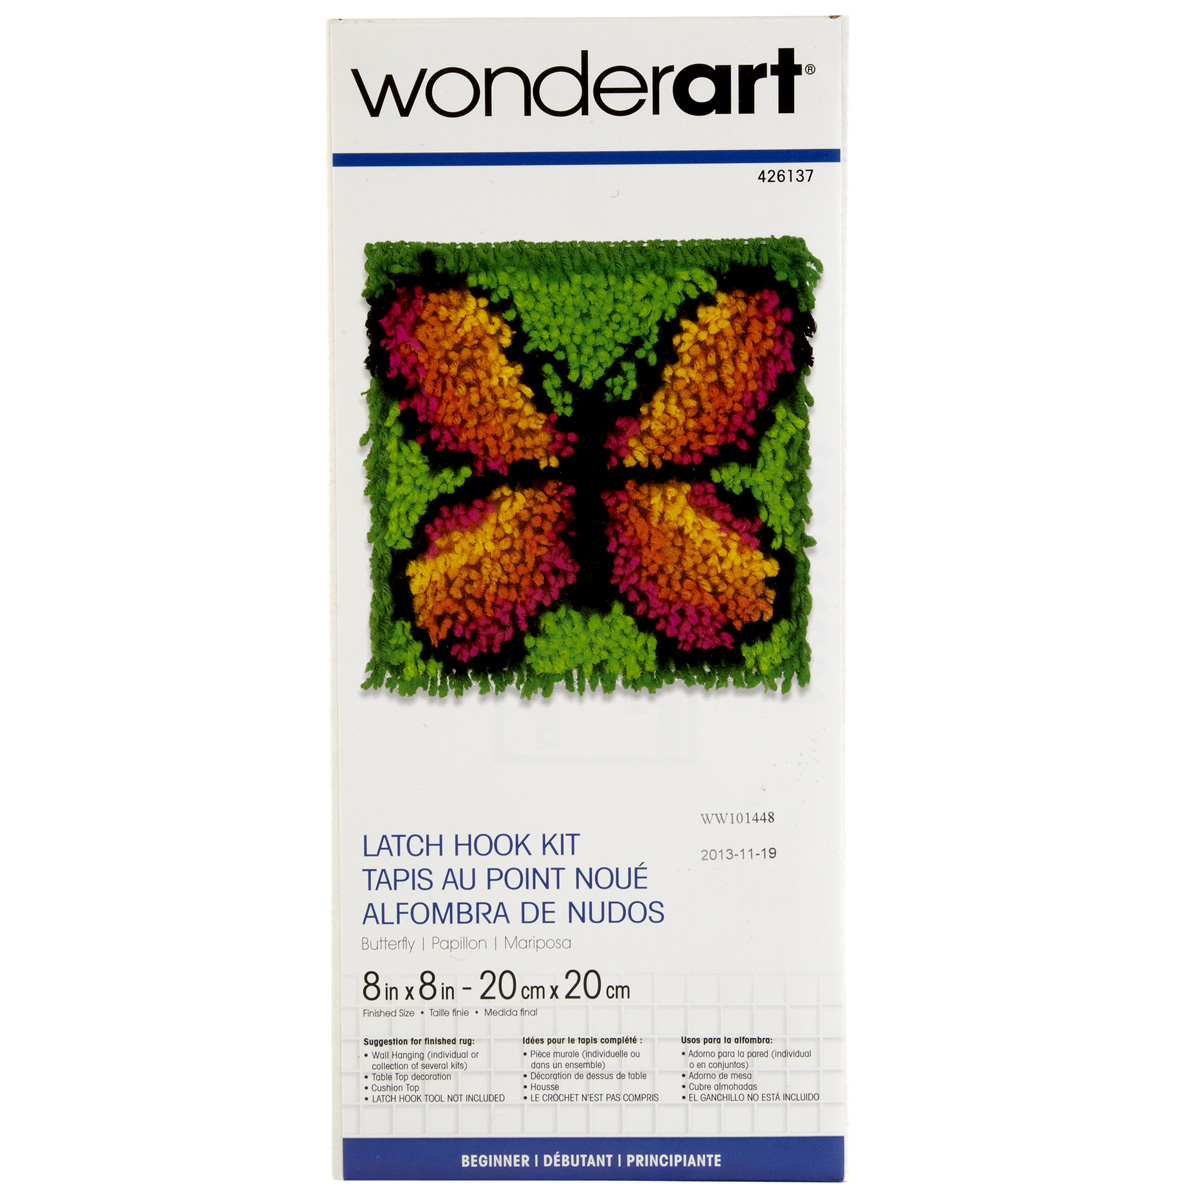 Wonderart latch hook butterfly instructions